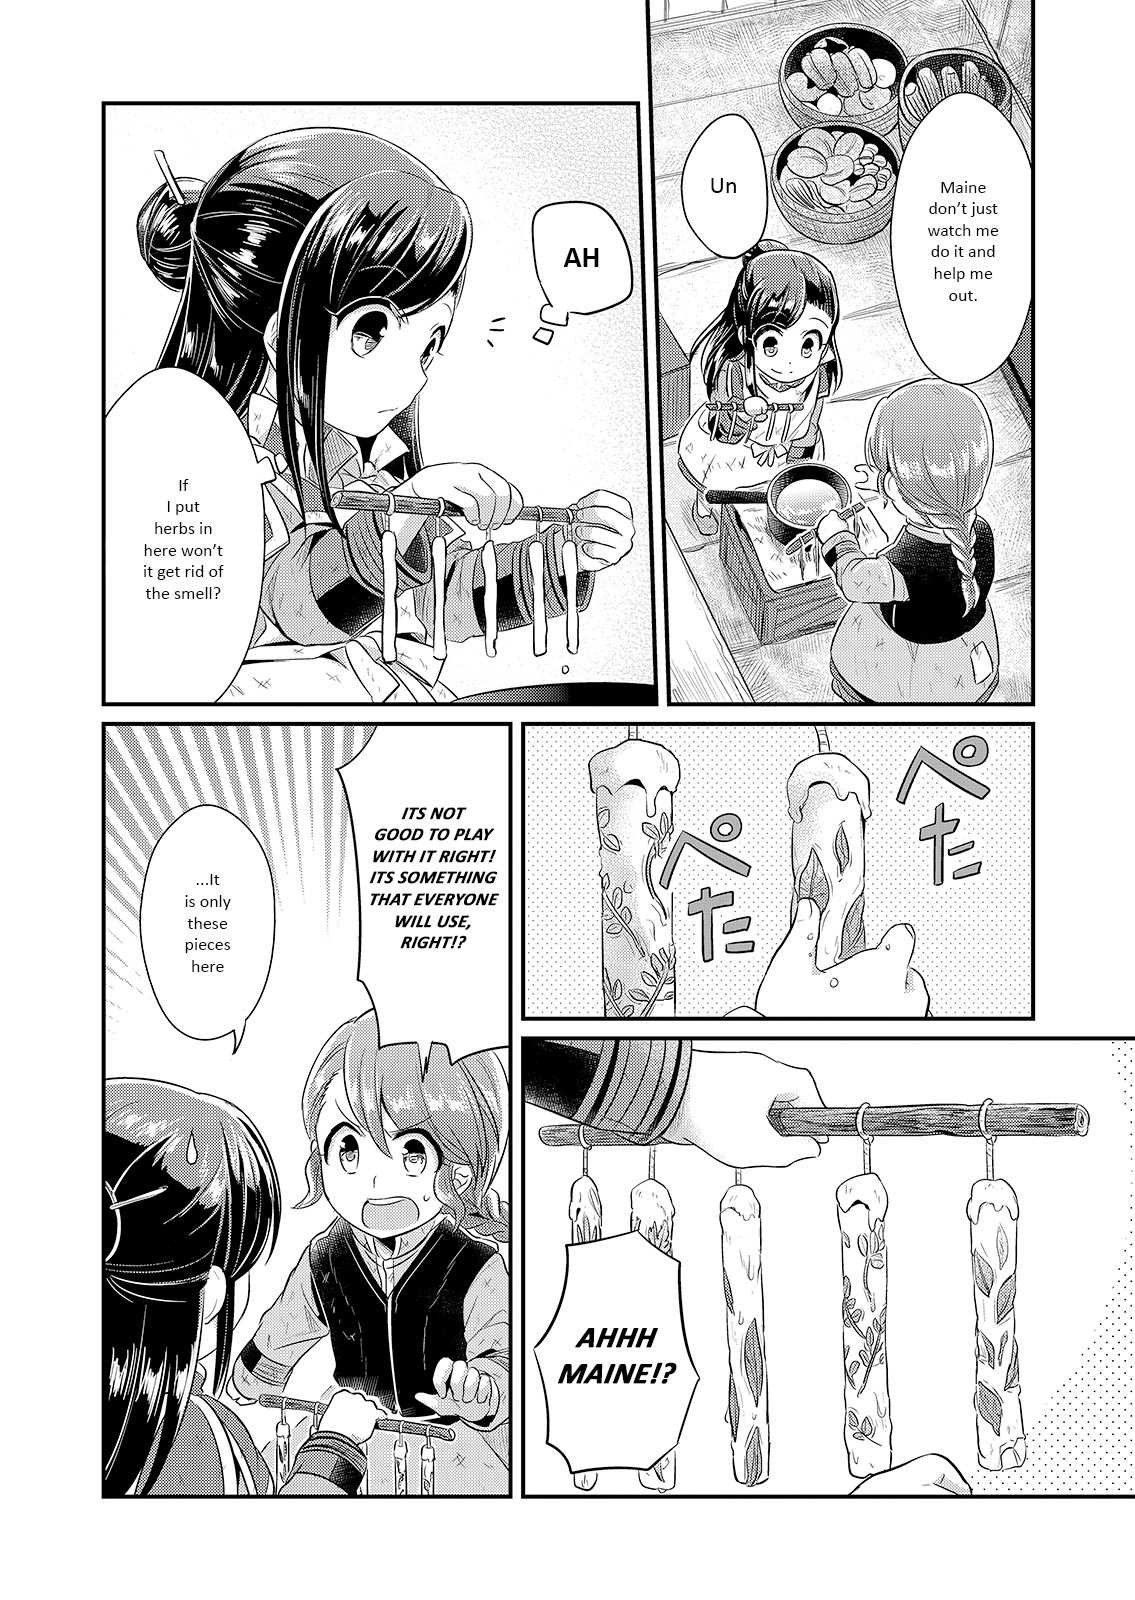 Manga Part 3 Volume 4, Ascendance of a Bookworm Wiki